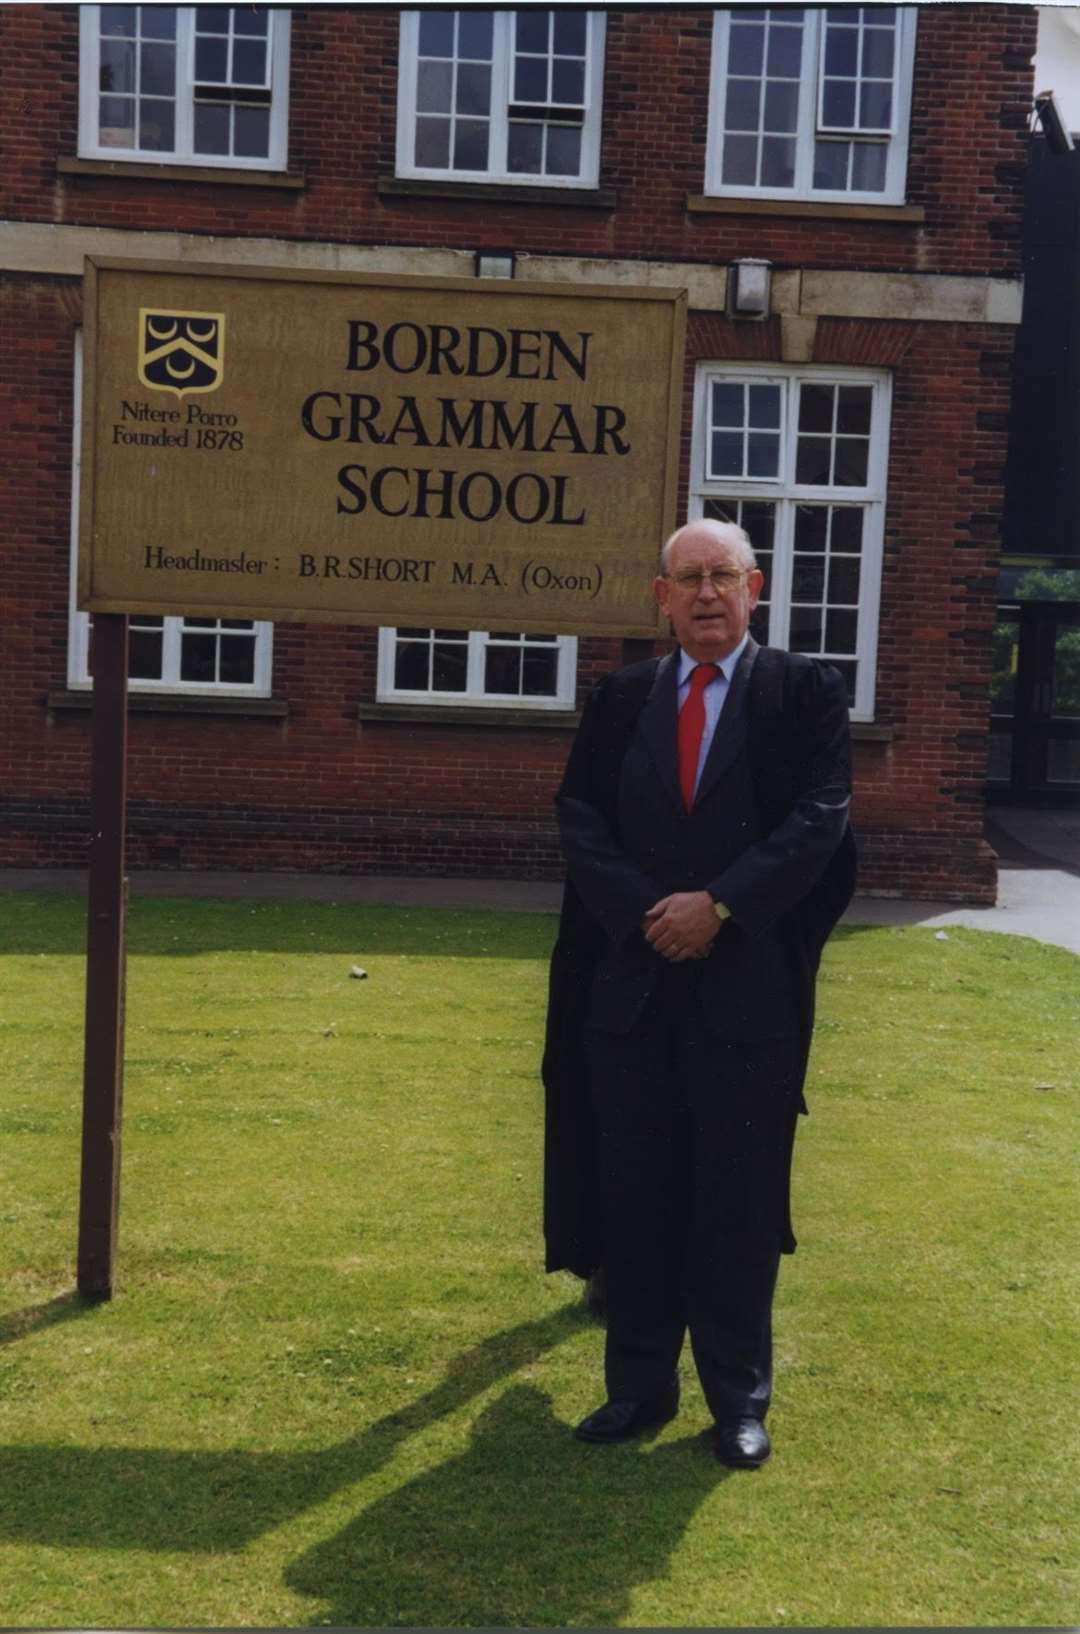 Bryan Short was Borden's longest-serving headmaster